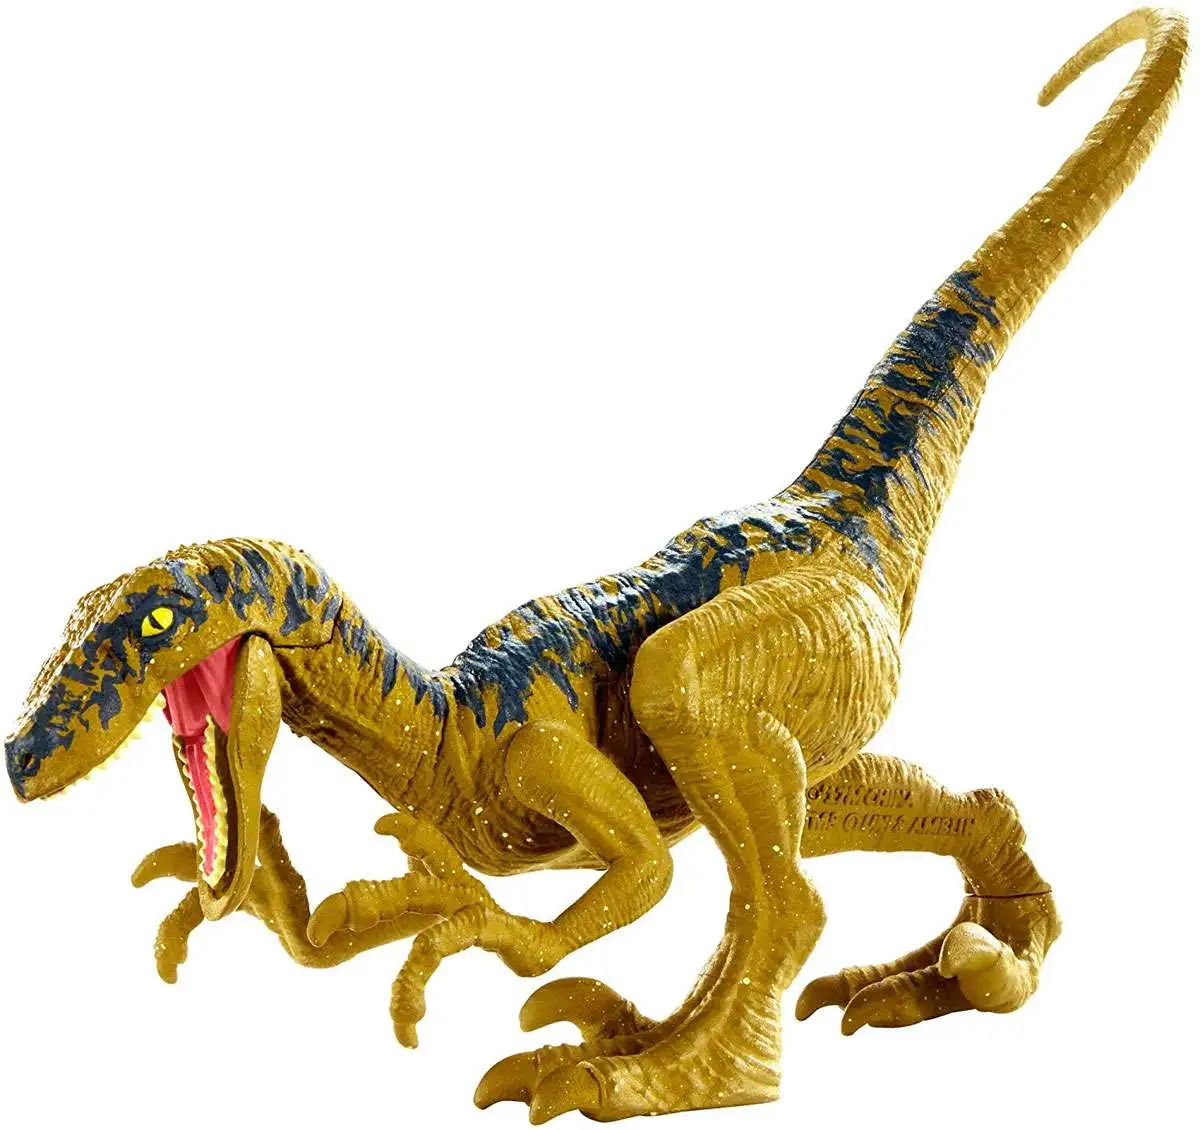 Jurassic World Fallen Kingdom Dino Rivals Velociraptor Delta 2018 for sale online 